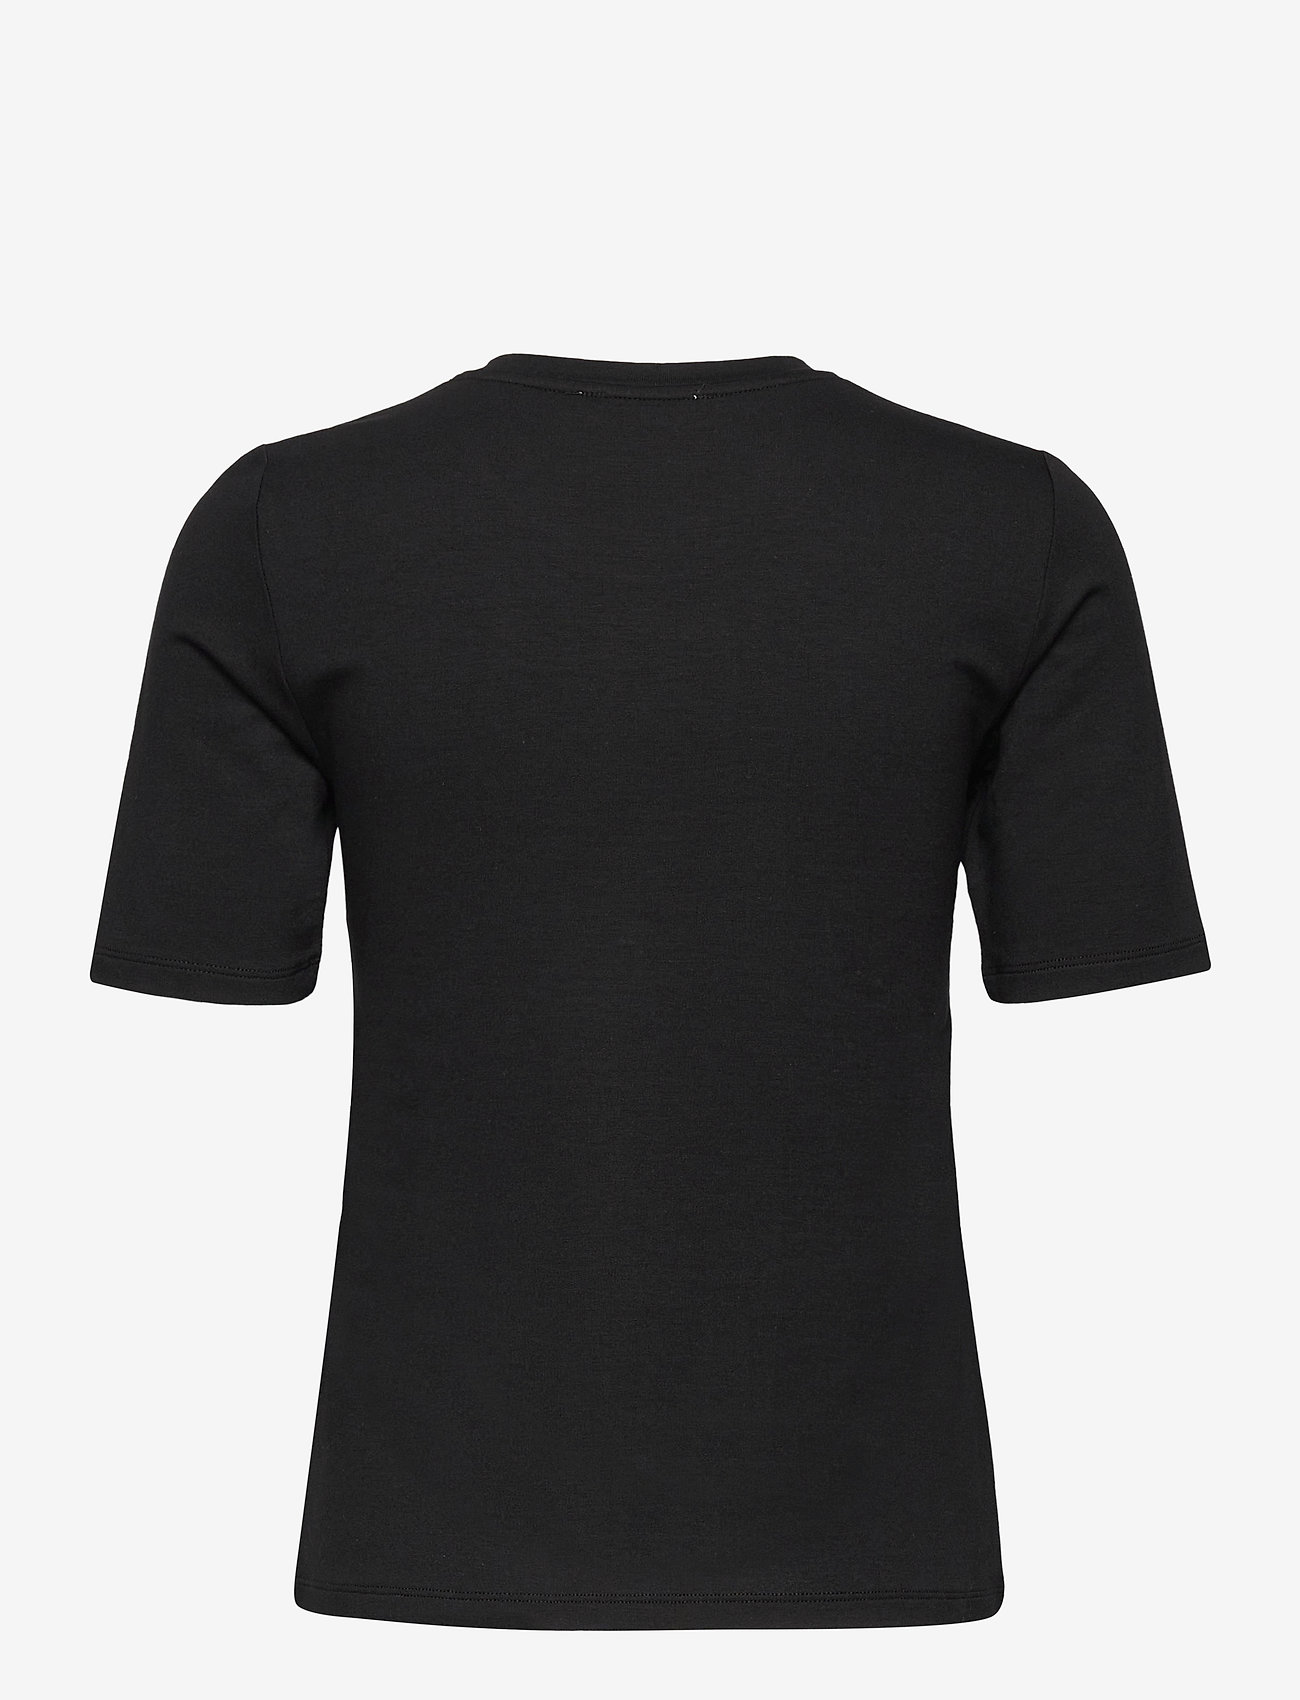 Stylein - CHAMBERS - t-shirts - black - 2